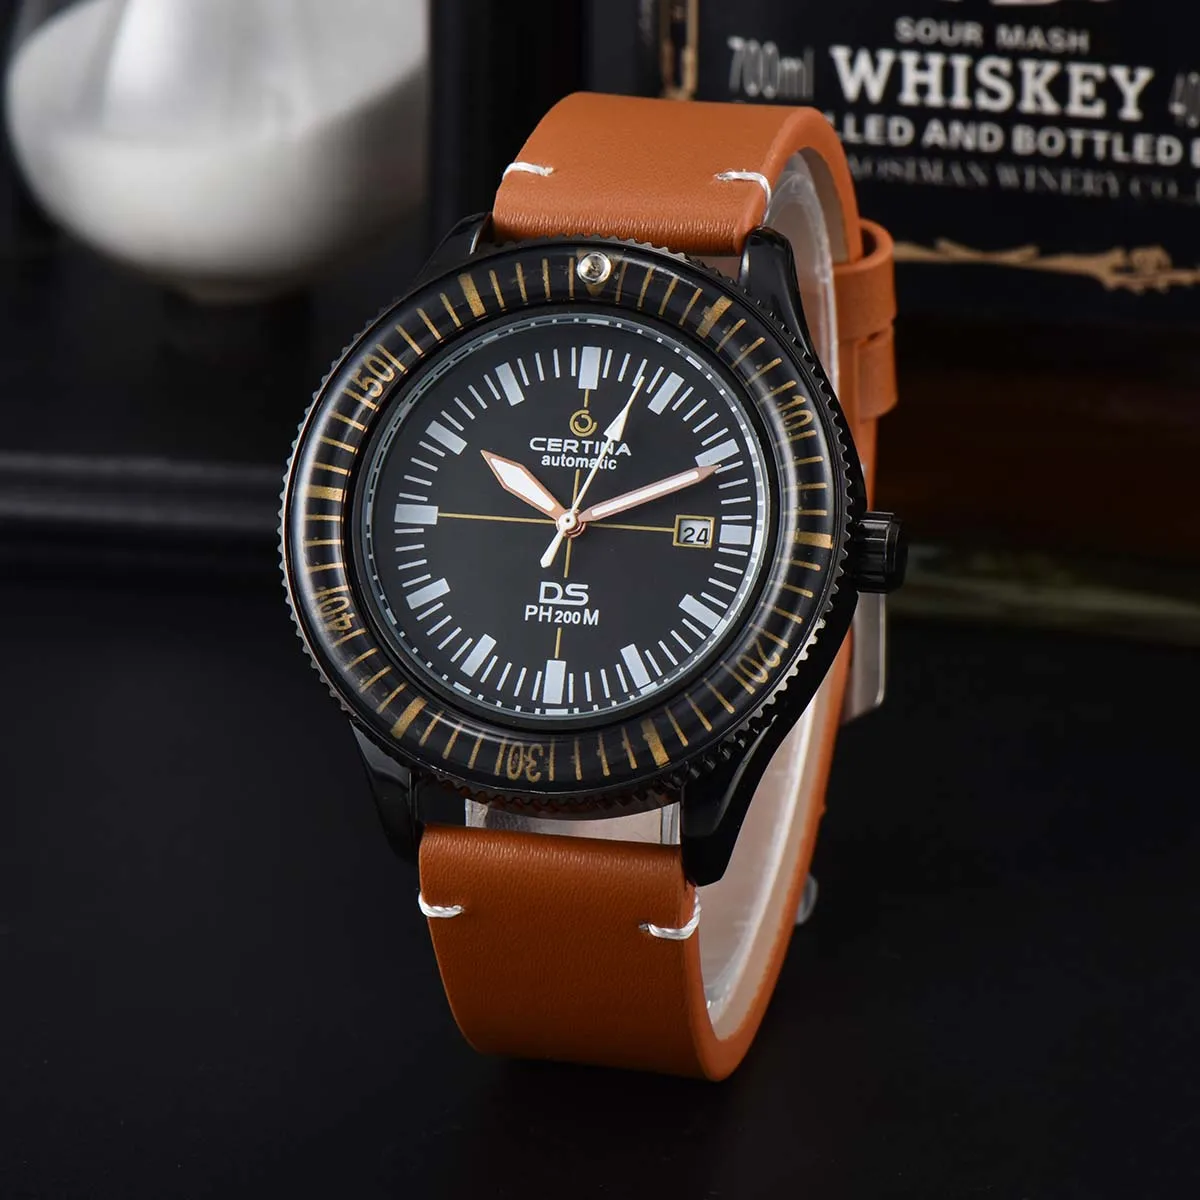 

Certina DS PH200M Quartz Watch Men's Luxury Watch Business Casual Fashion Men Watches Leather Waterproof Watch for Men Big Dial